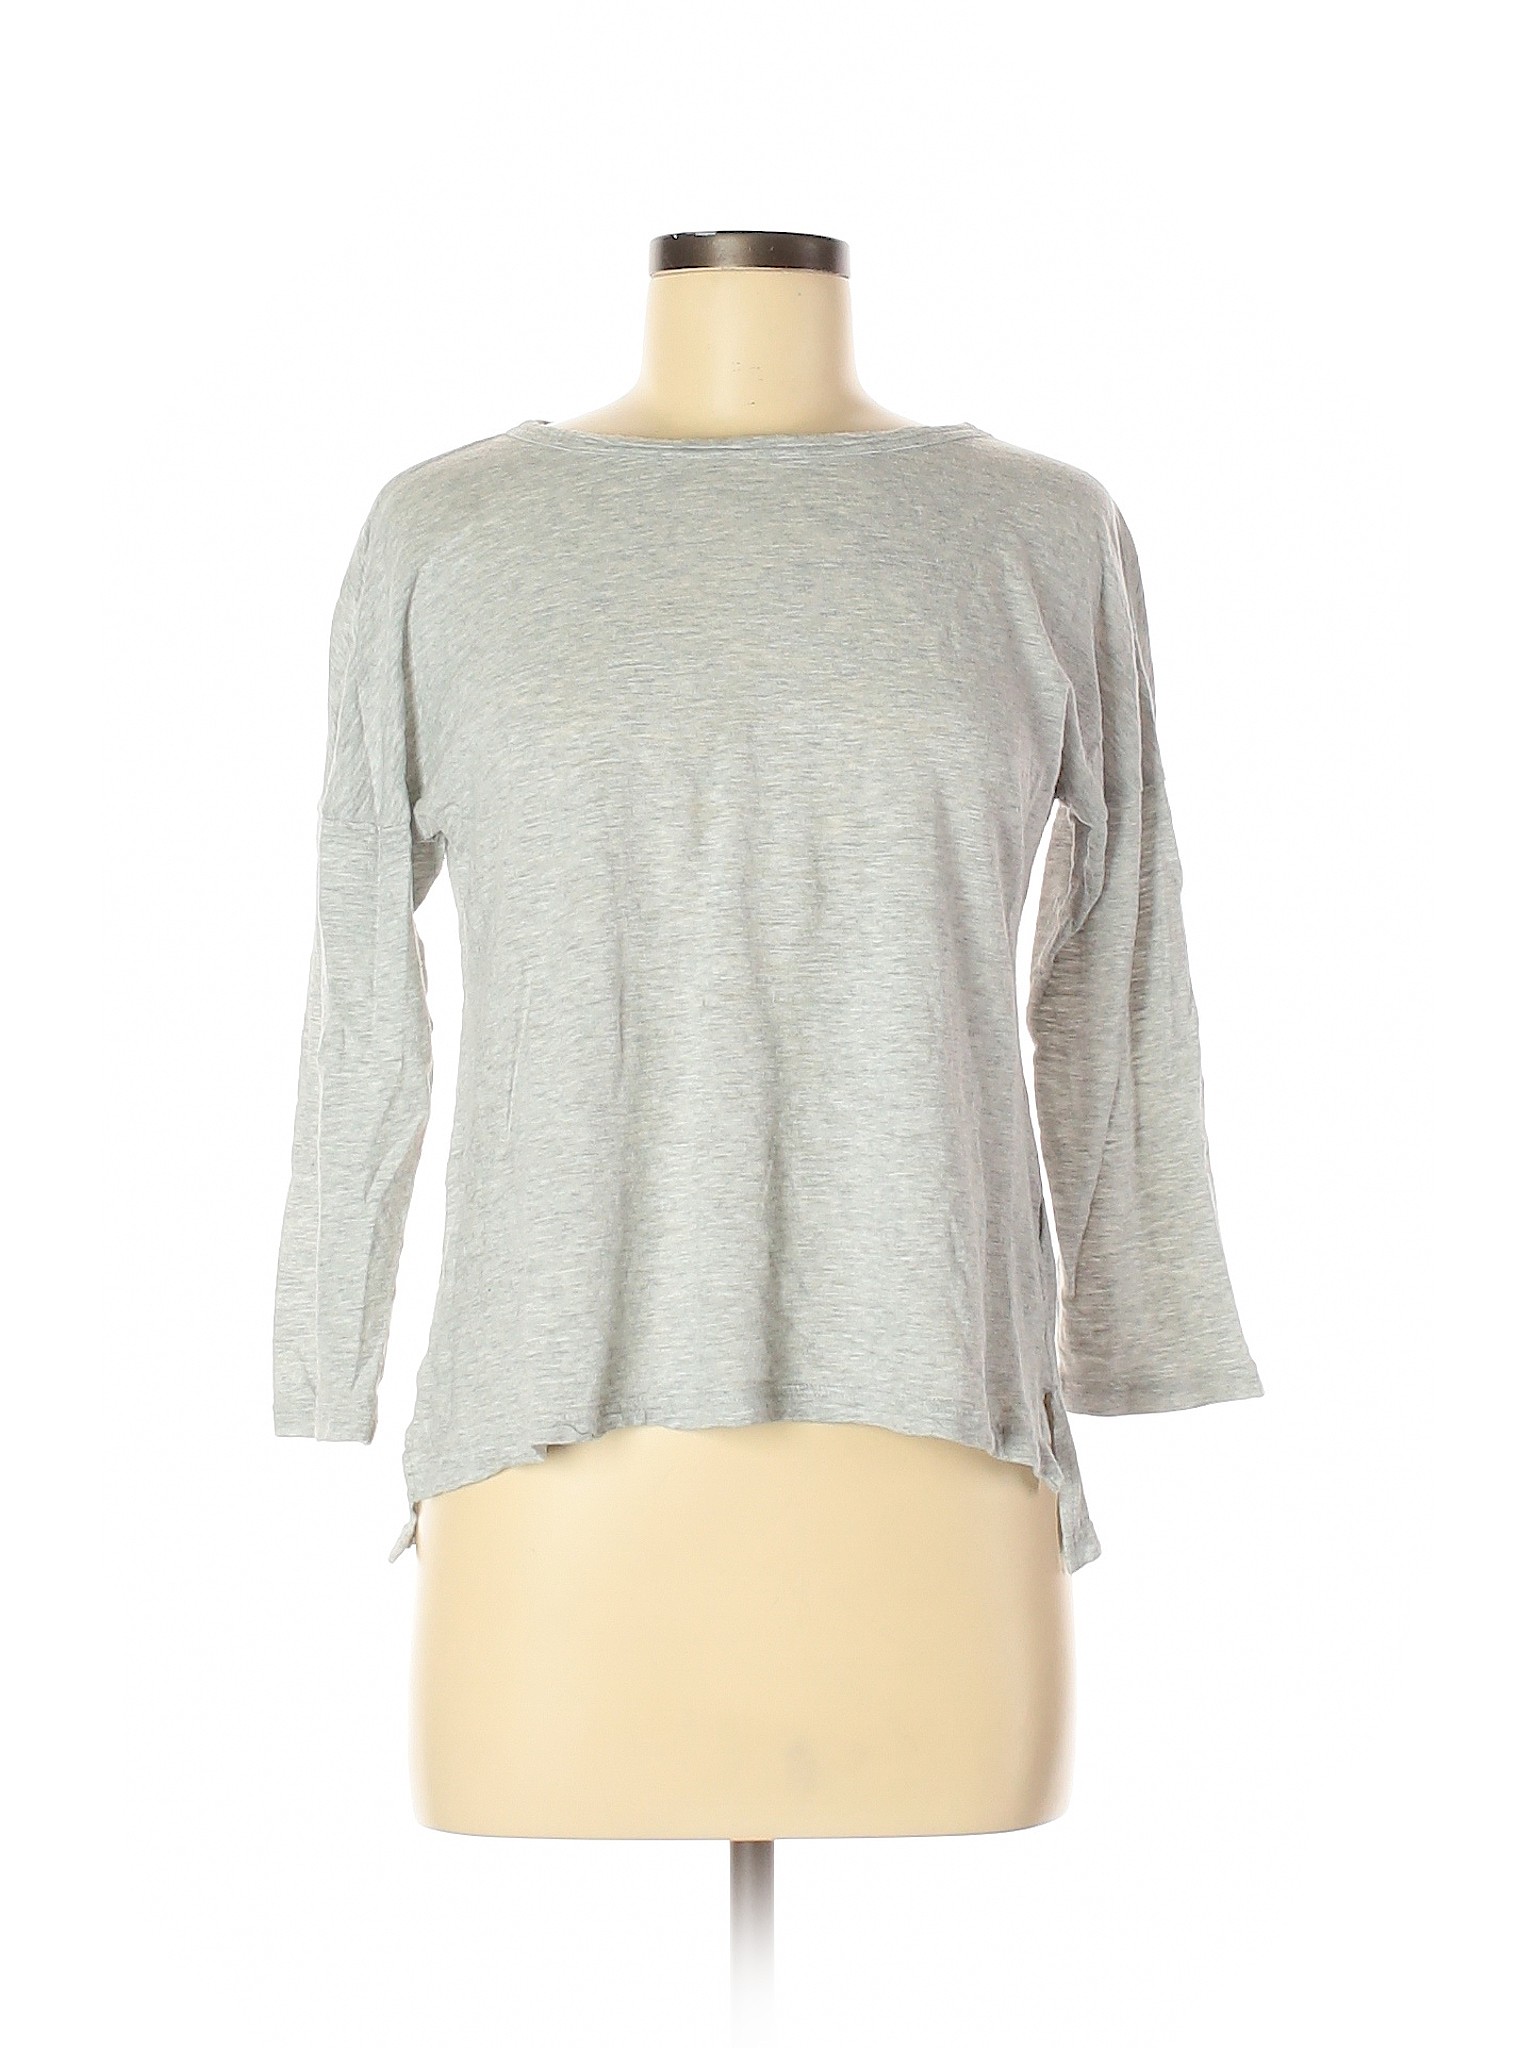 Banana Republic Factory Store Women Gray 3/4 Sleeve T-Shirt S | eBay